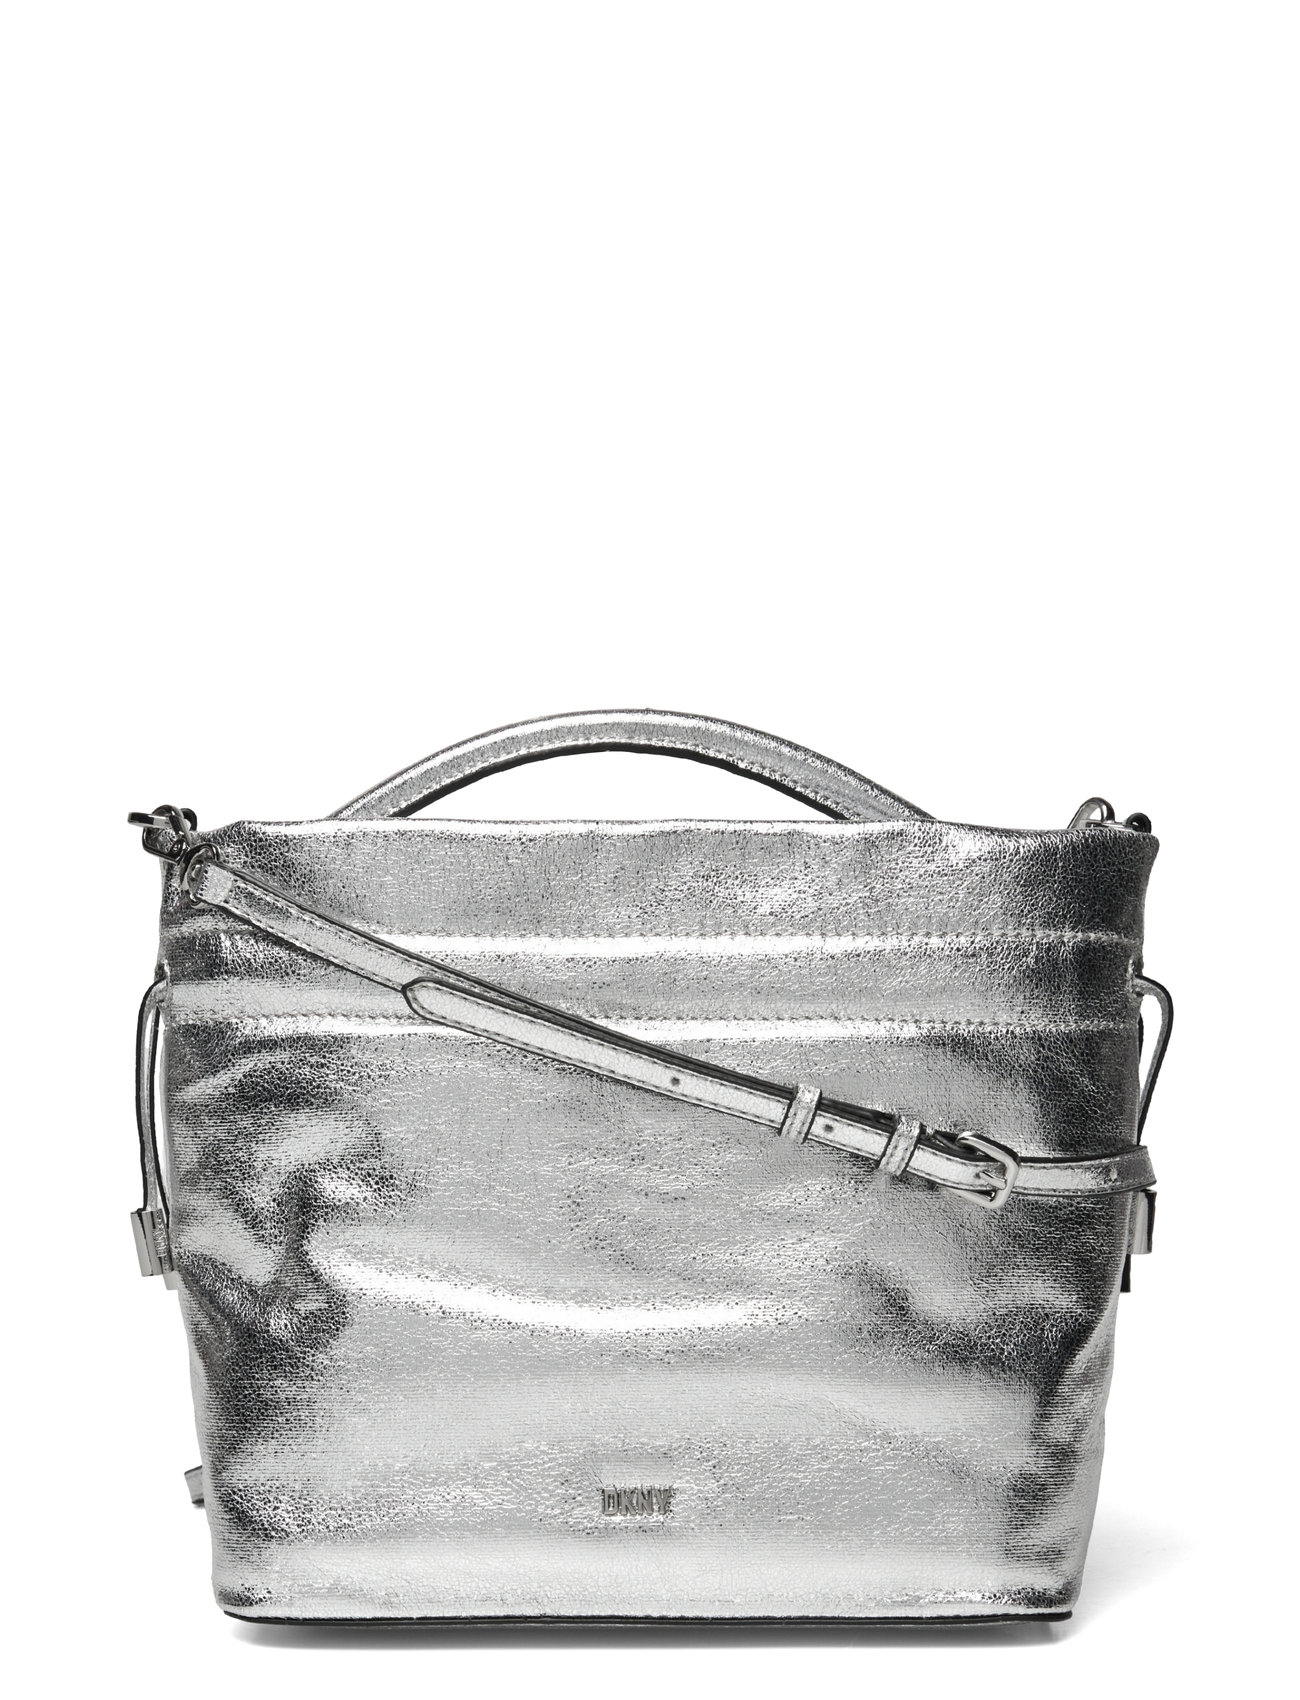 DKNY Bags & Handbags for Women for sale | eBay